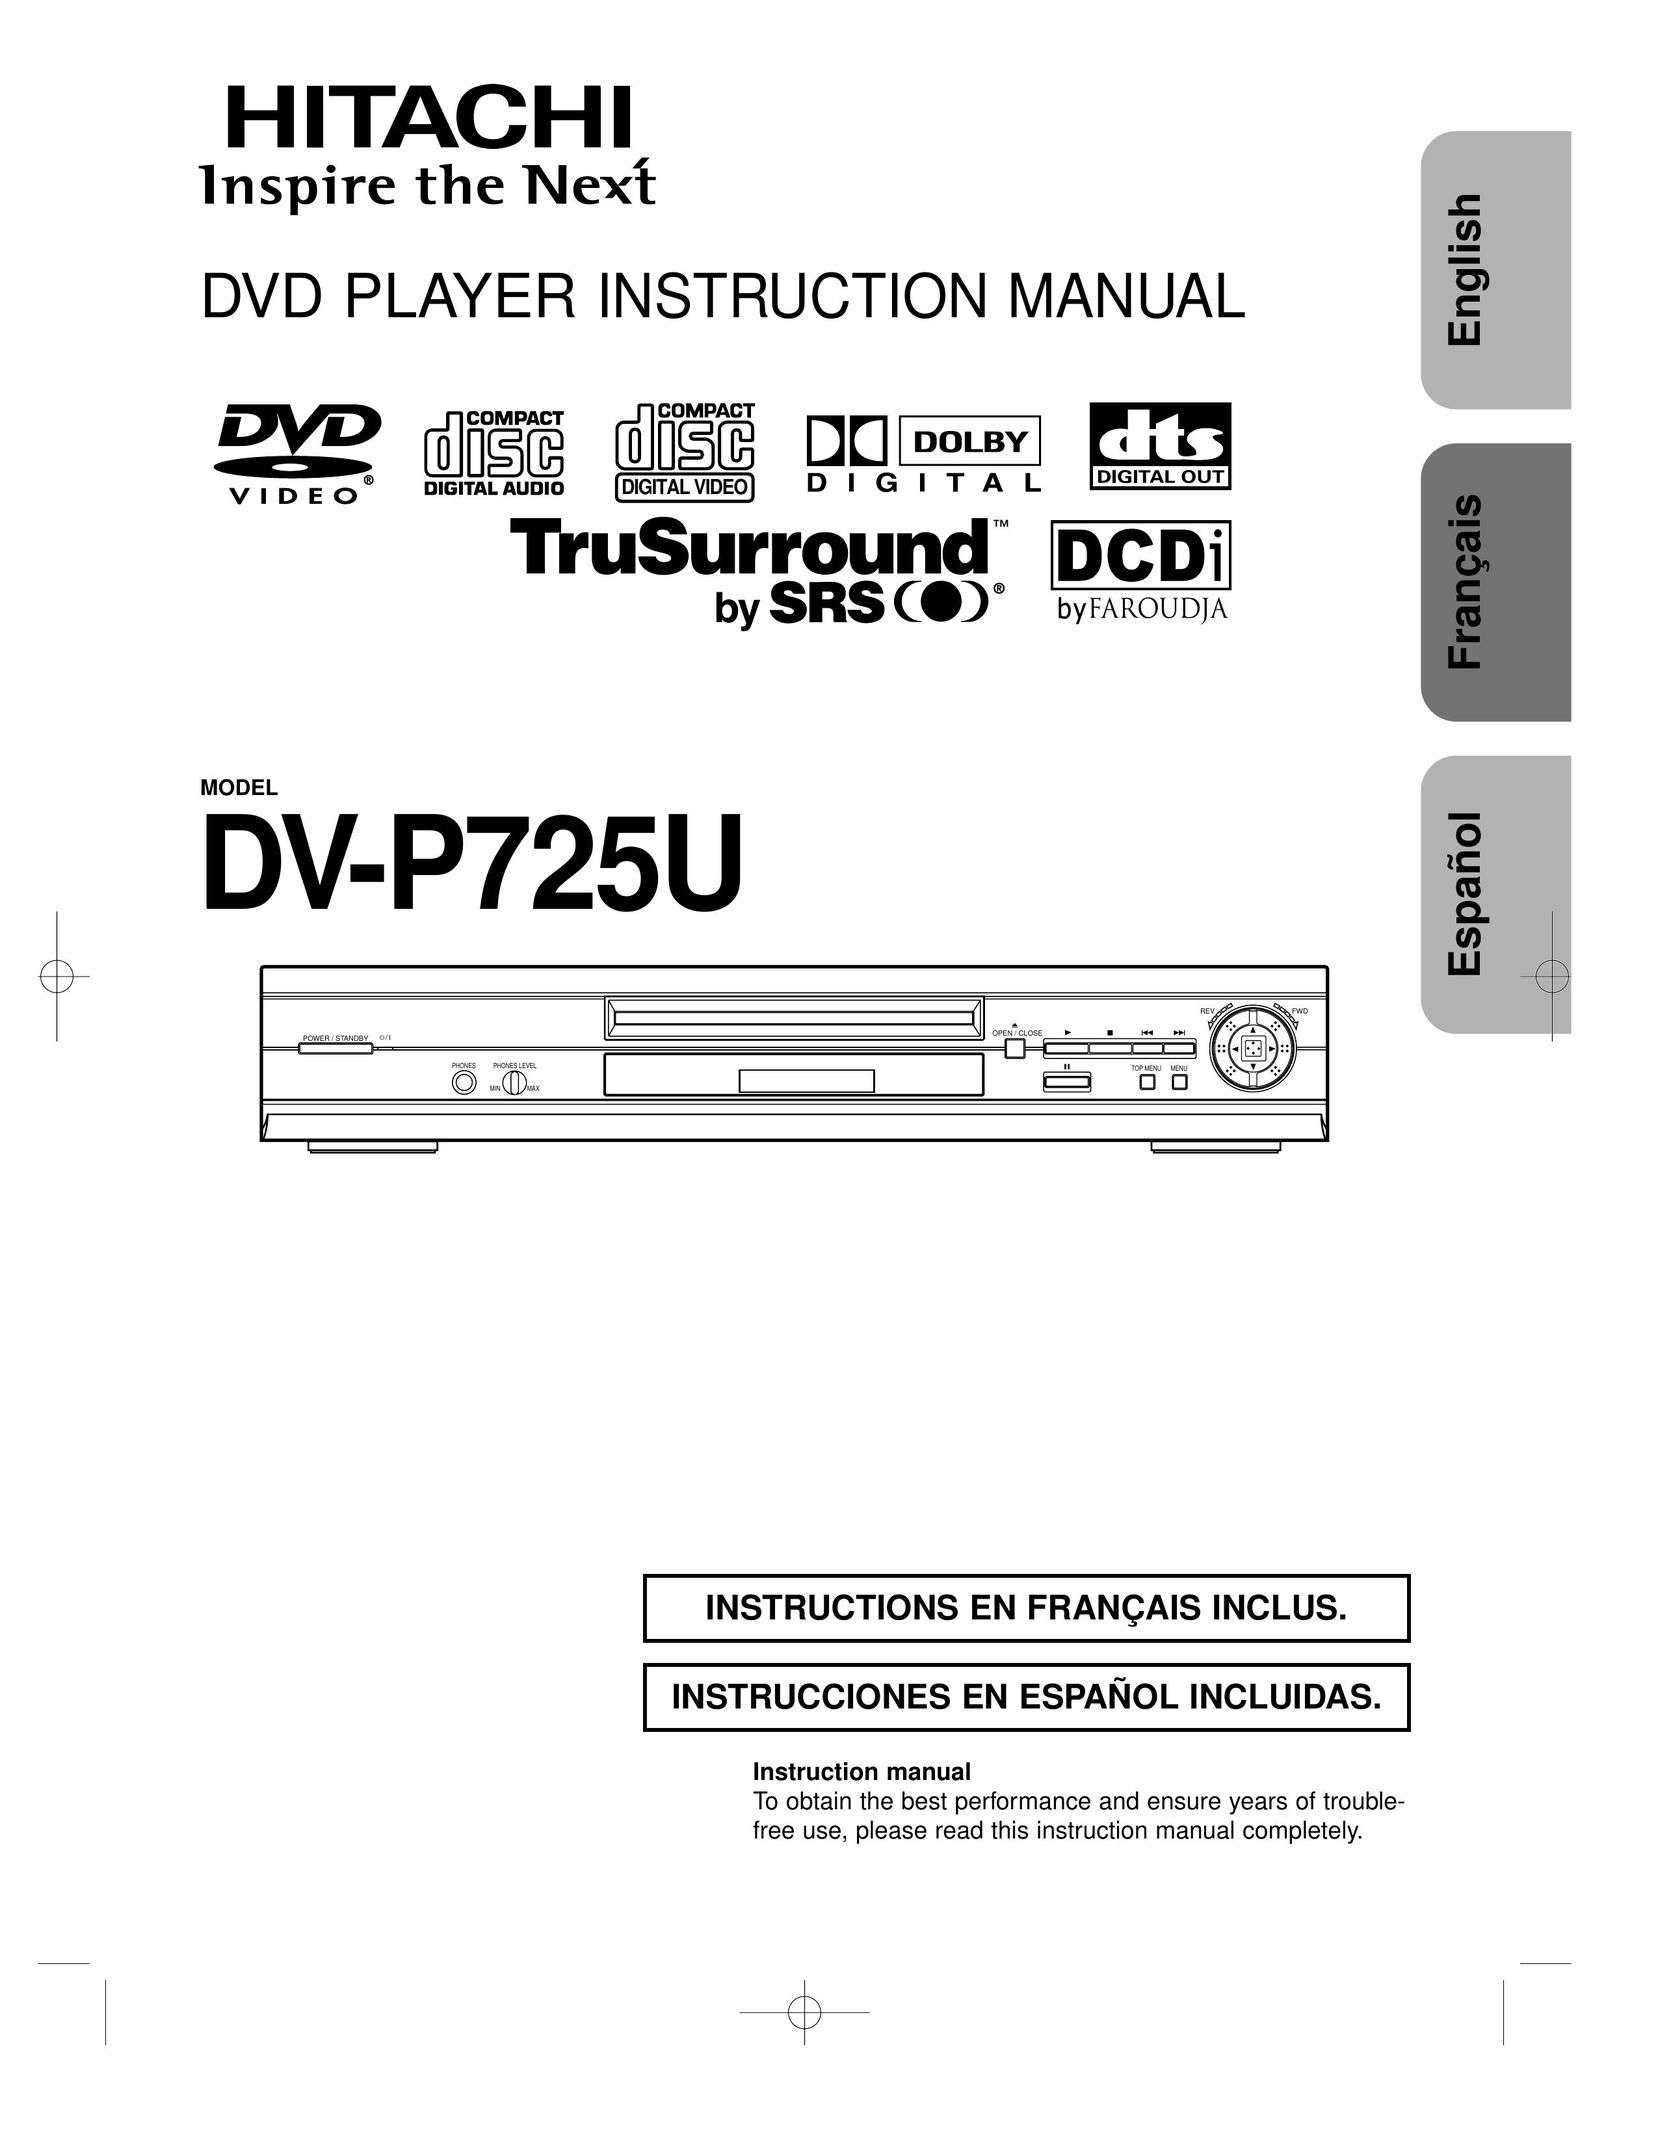 Hitachi DVP725U DVD Player User Manual